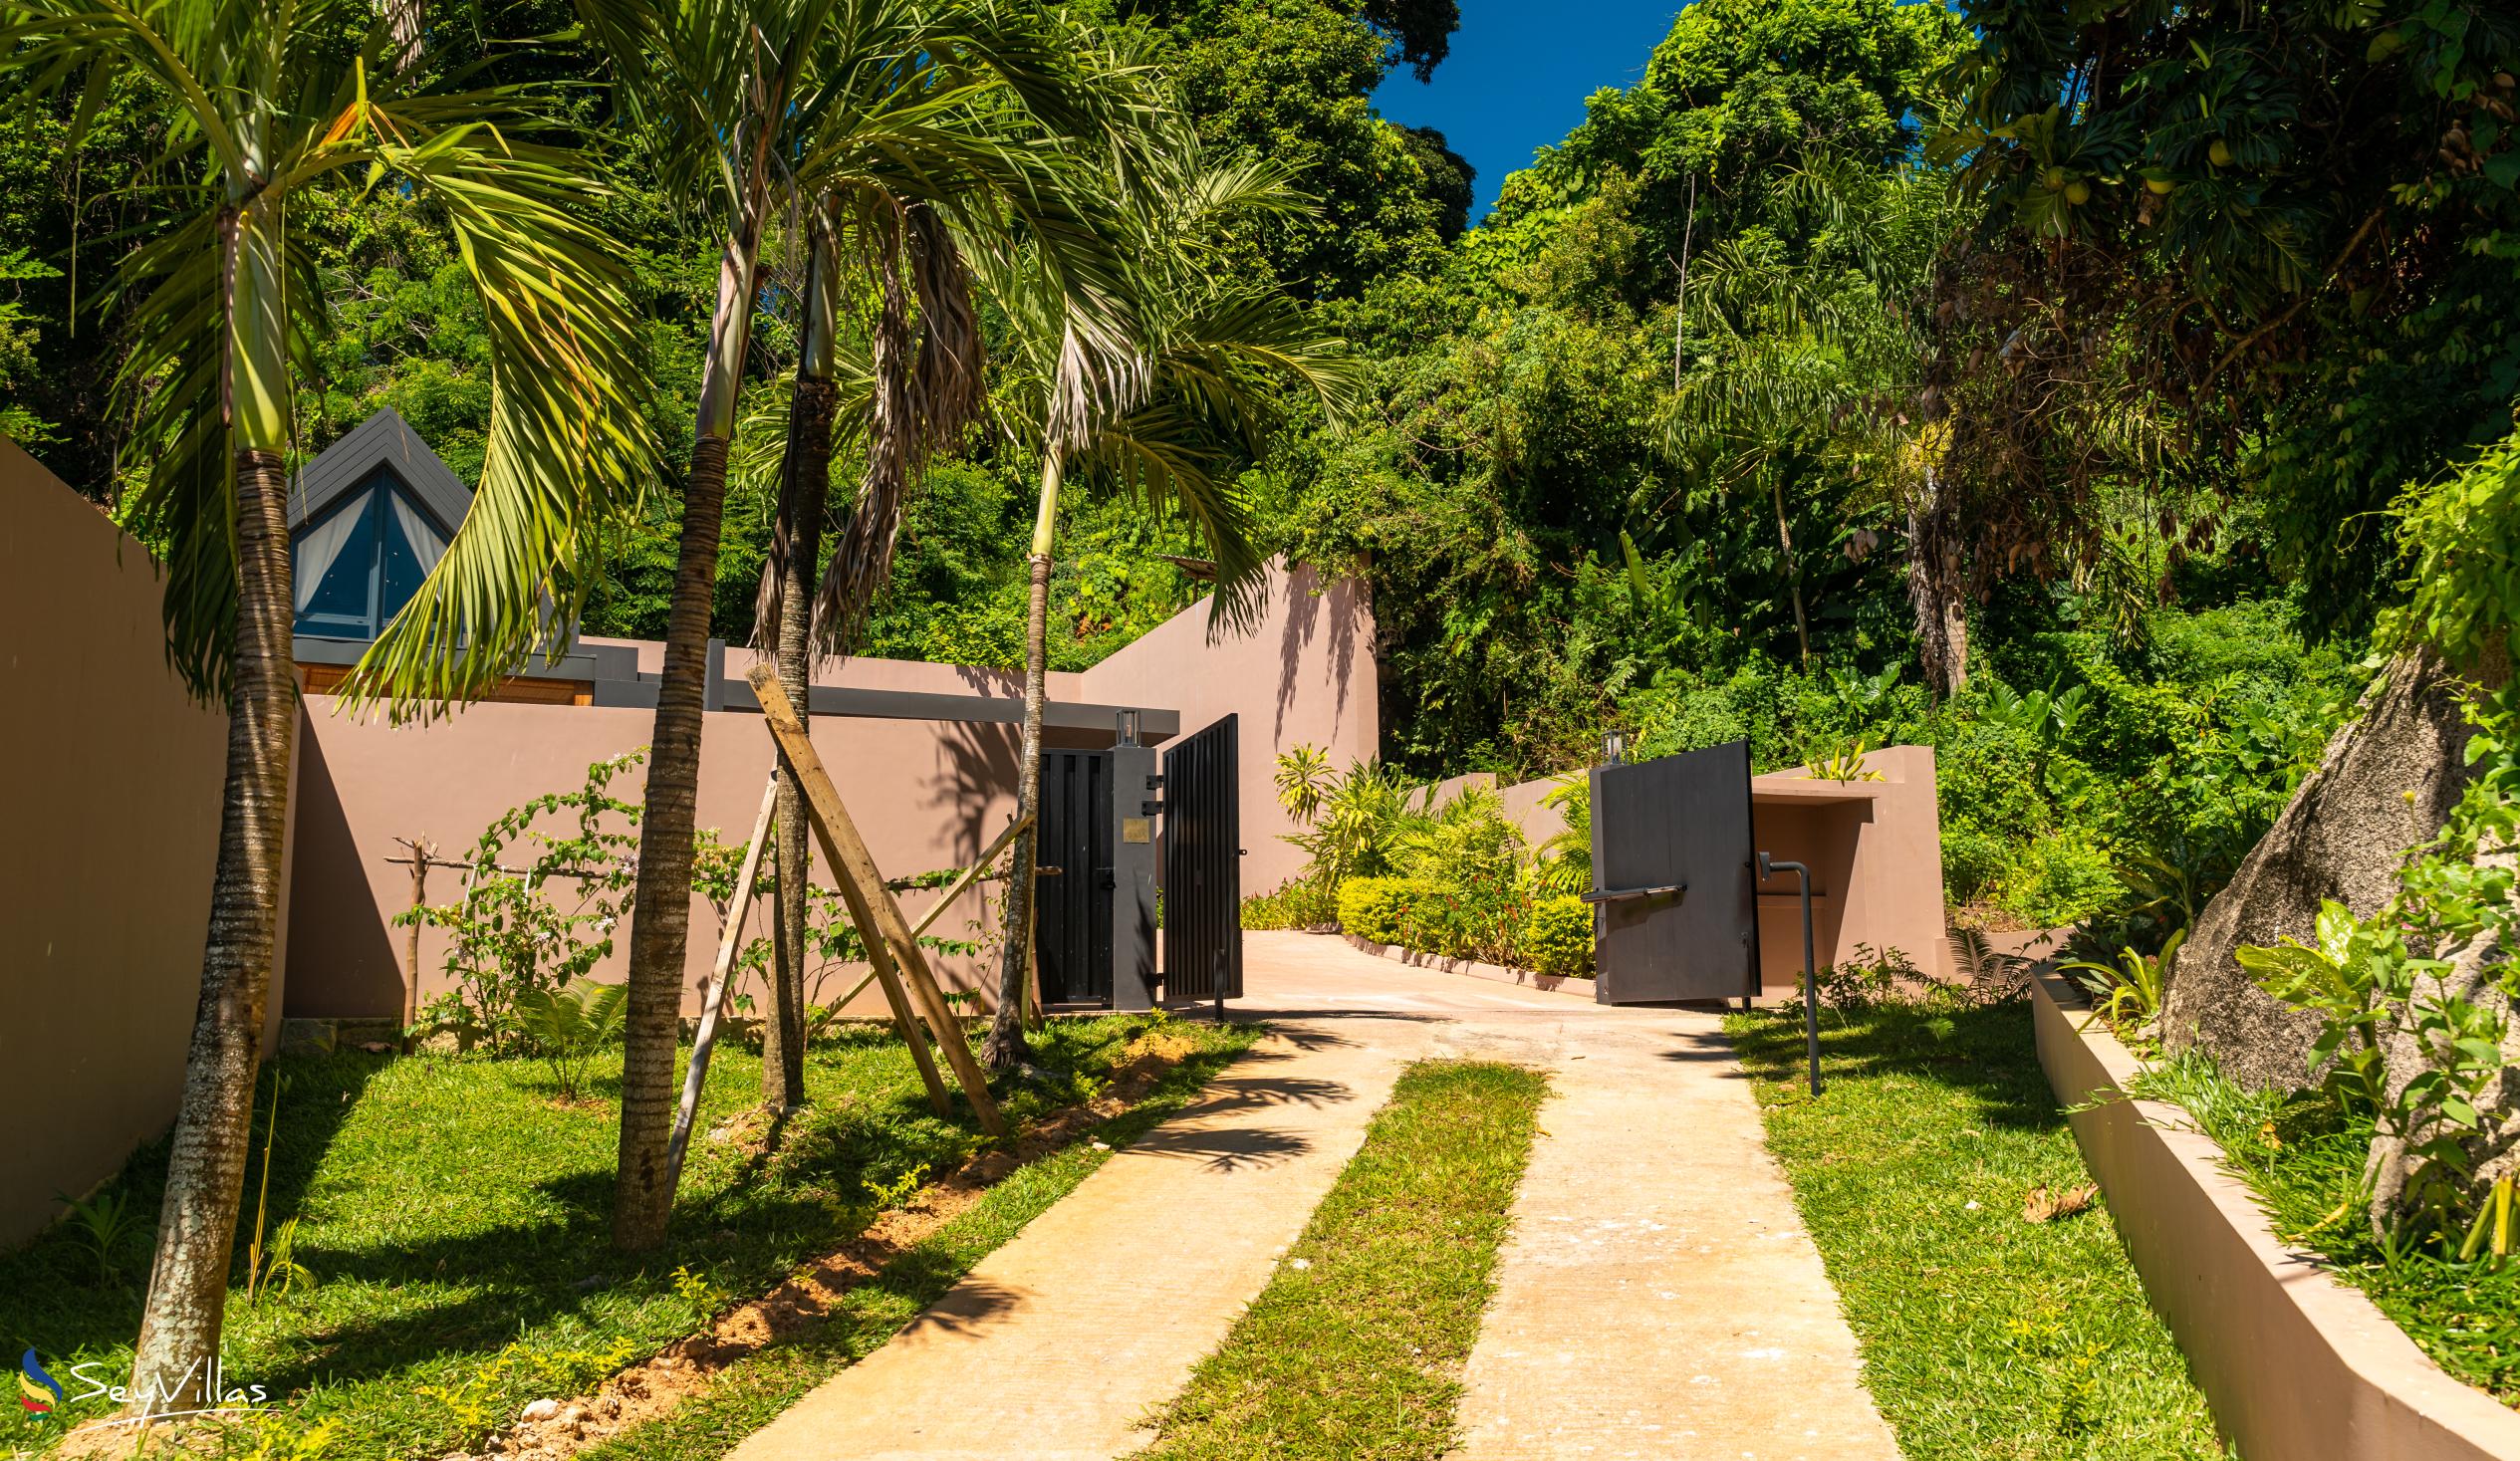 Foto 16: Maison Gaia - Aussenbereich - Mahé (Seychellen)